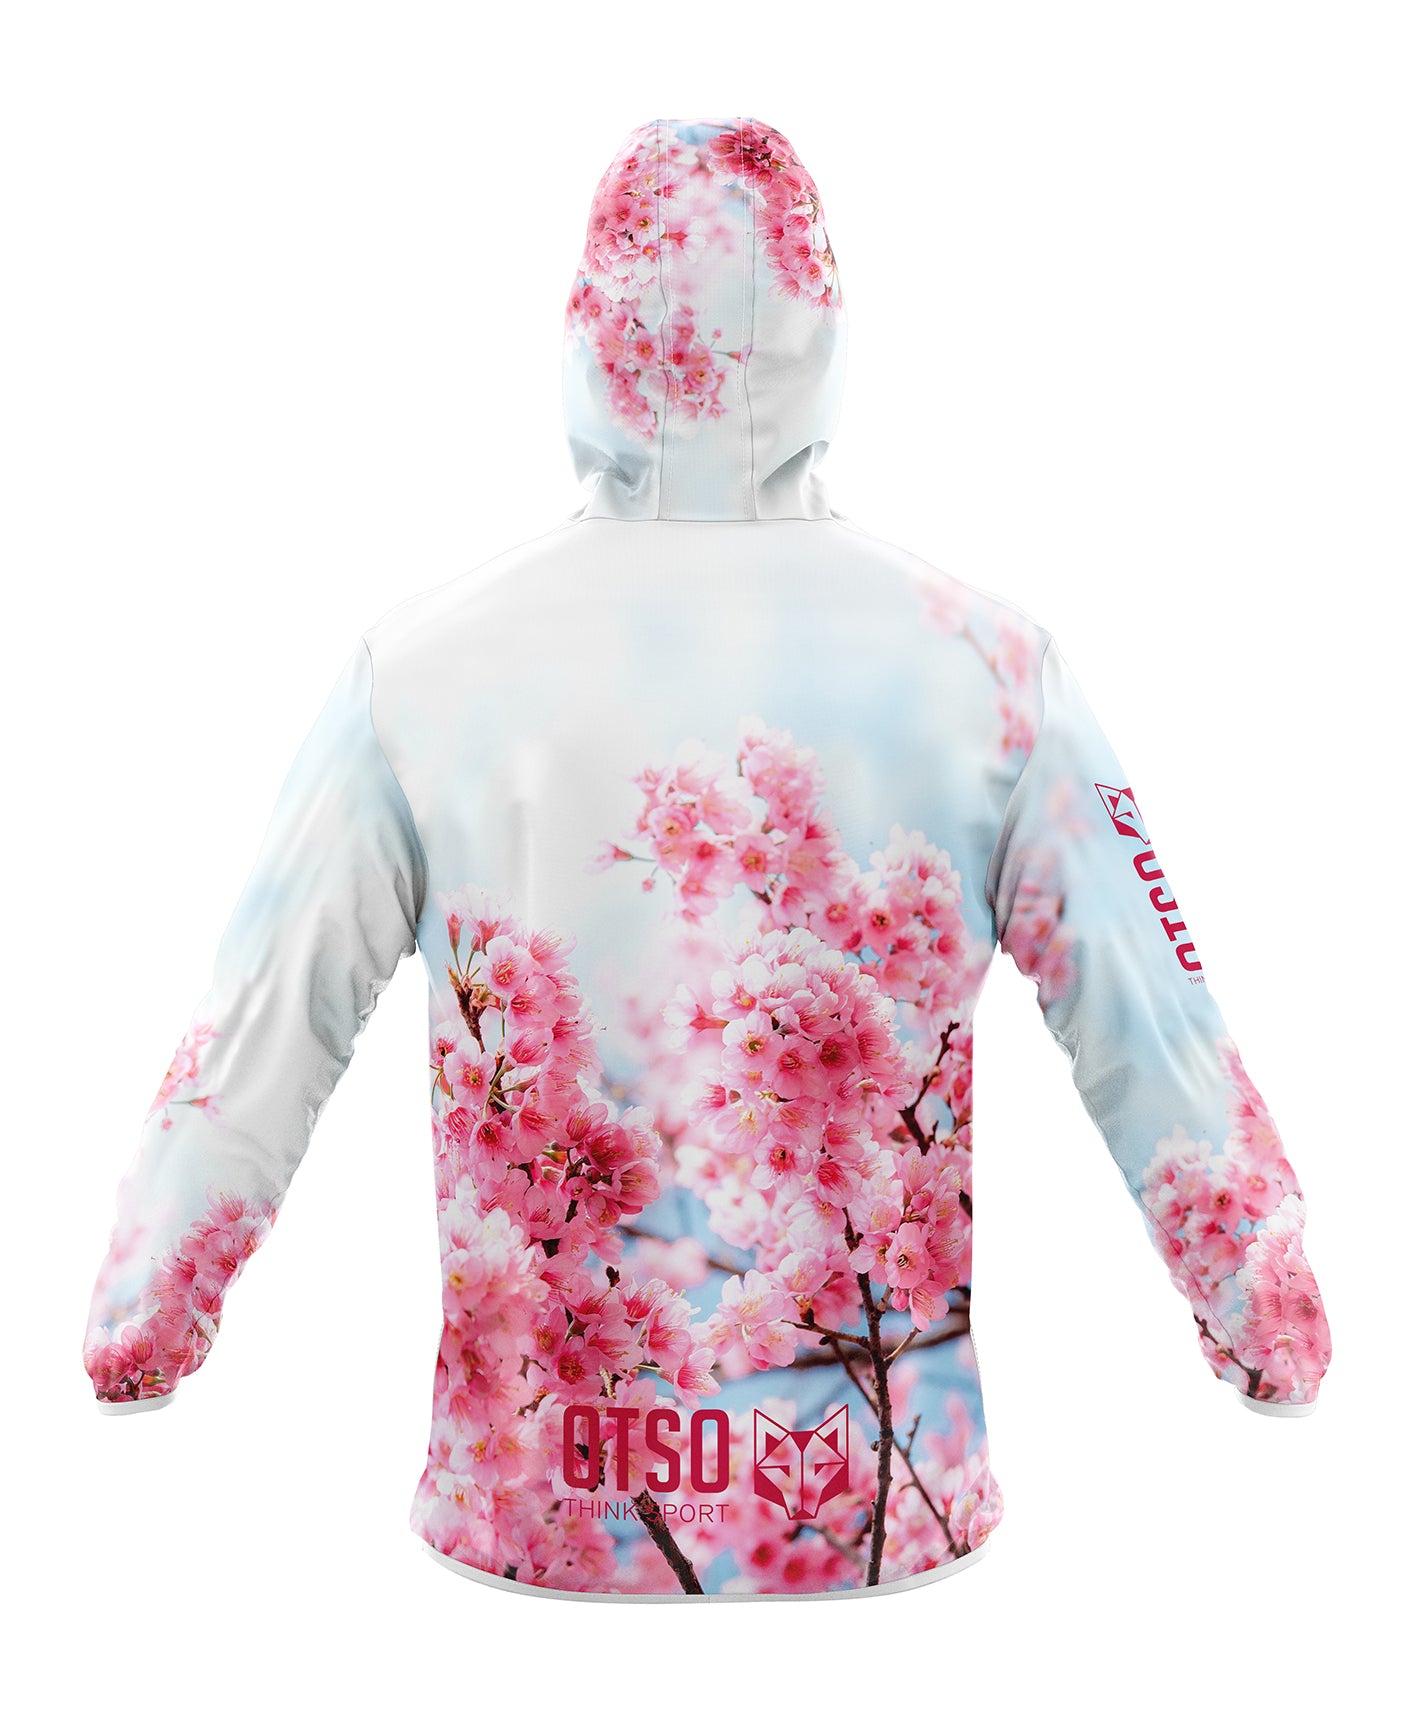 Unisex Running Jacket - Almond Blossom